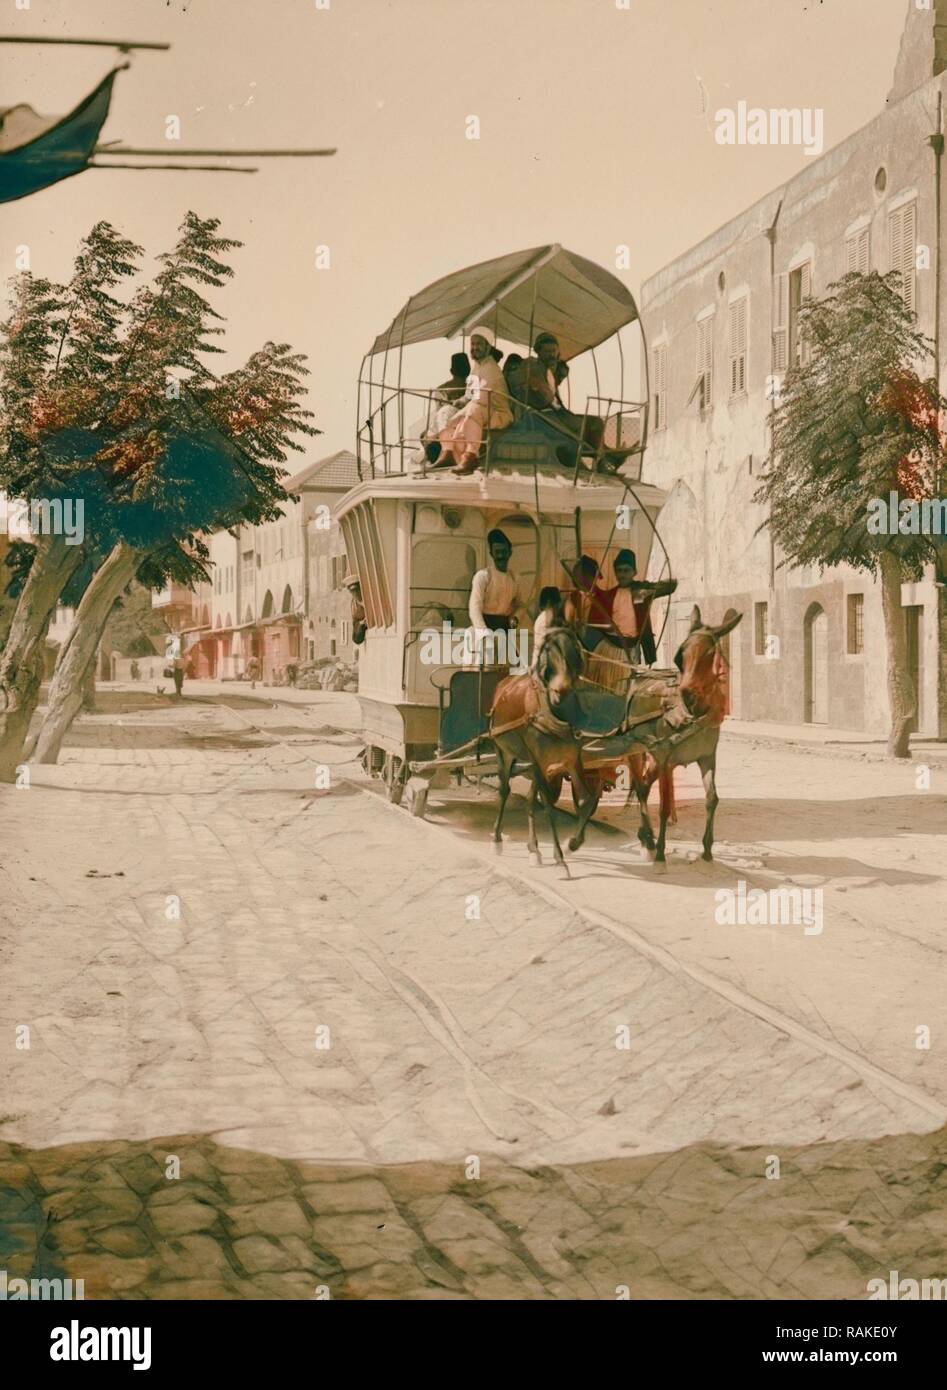 Tripoli. Mule-drawn tramcar 1900, Lebanon, Tripoli. Reimagined by Gibon. Classic art with a modern twist reimagined Stock Photo